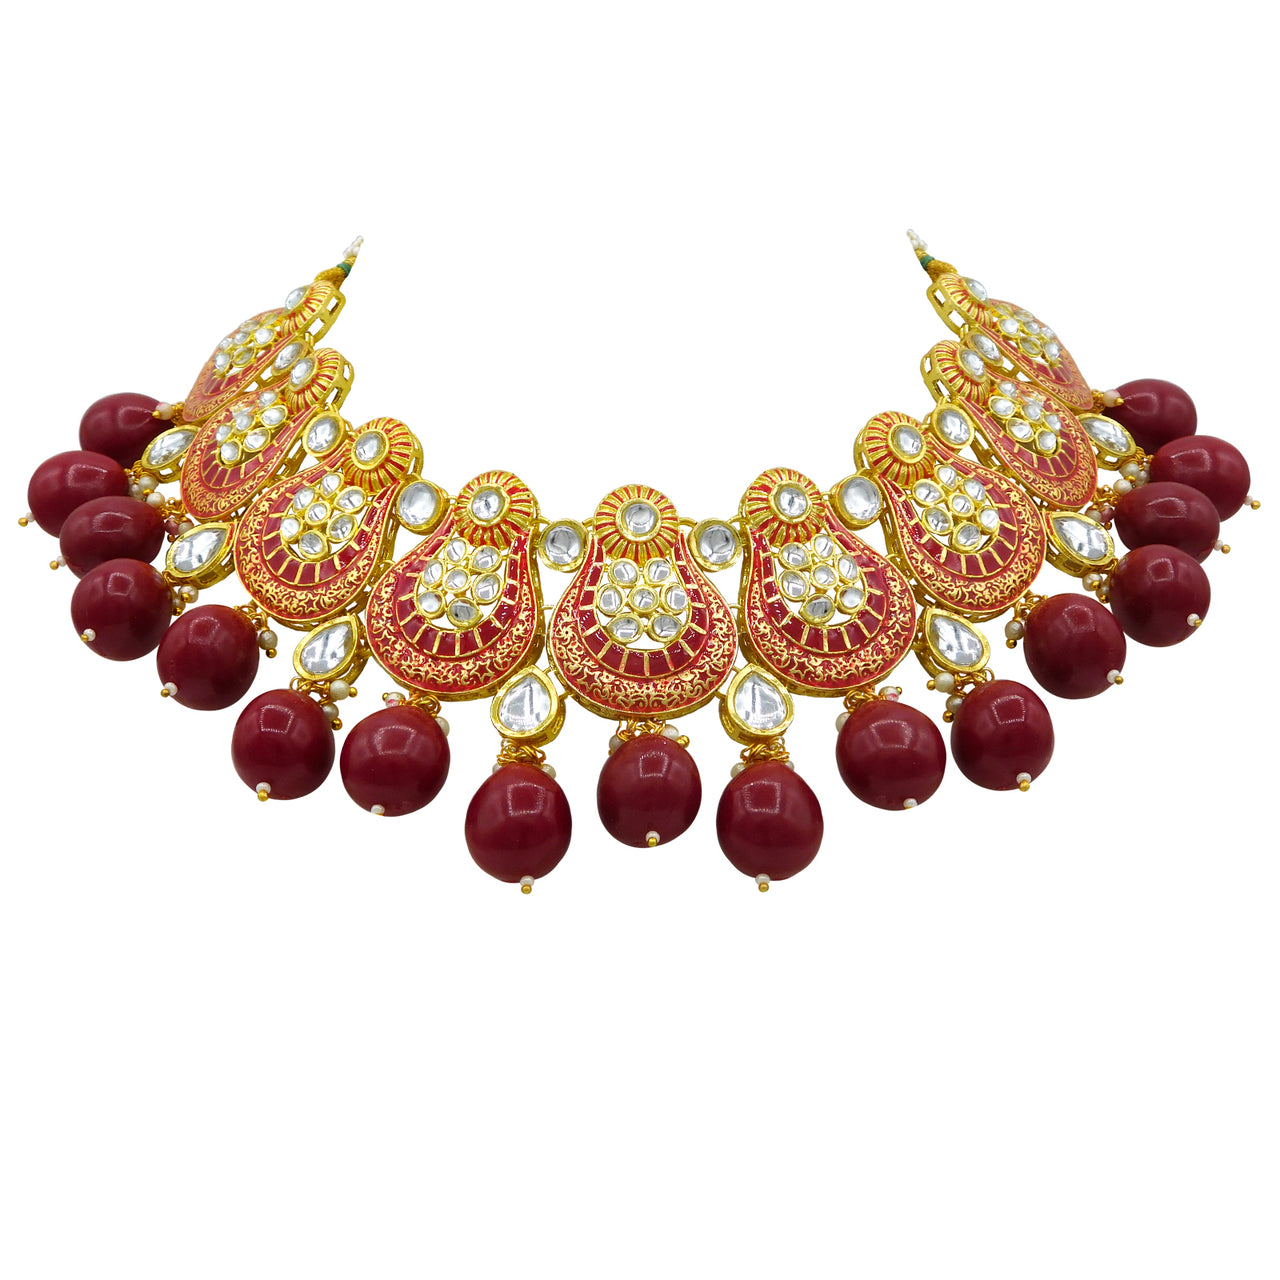 Sujwel Gold Plated Kundan Meenakari Choker Necklace Set (08-0447) - Sujwel